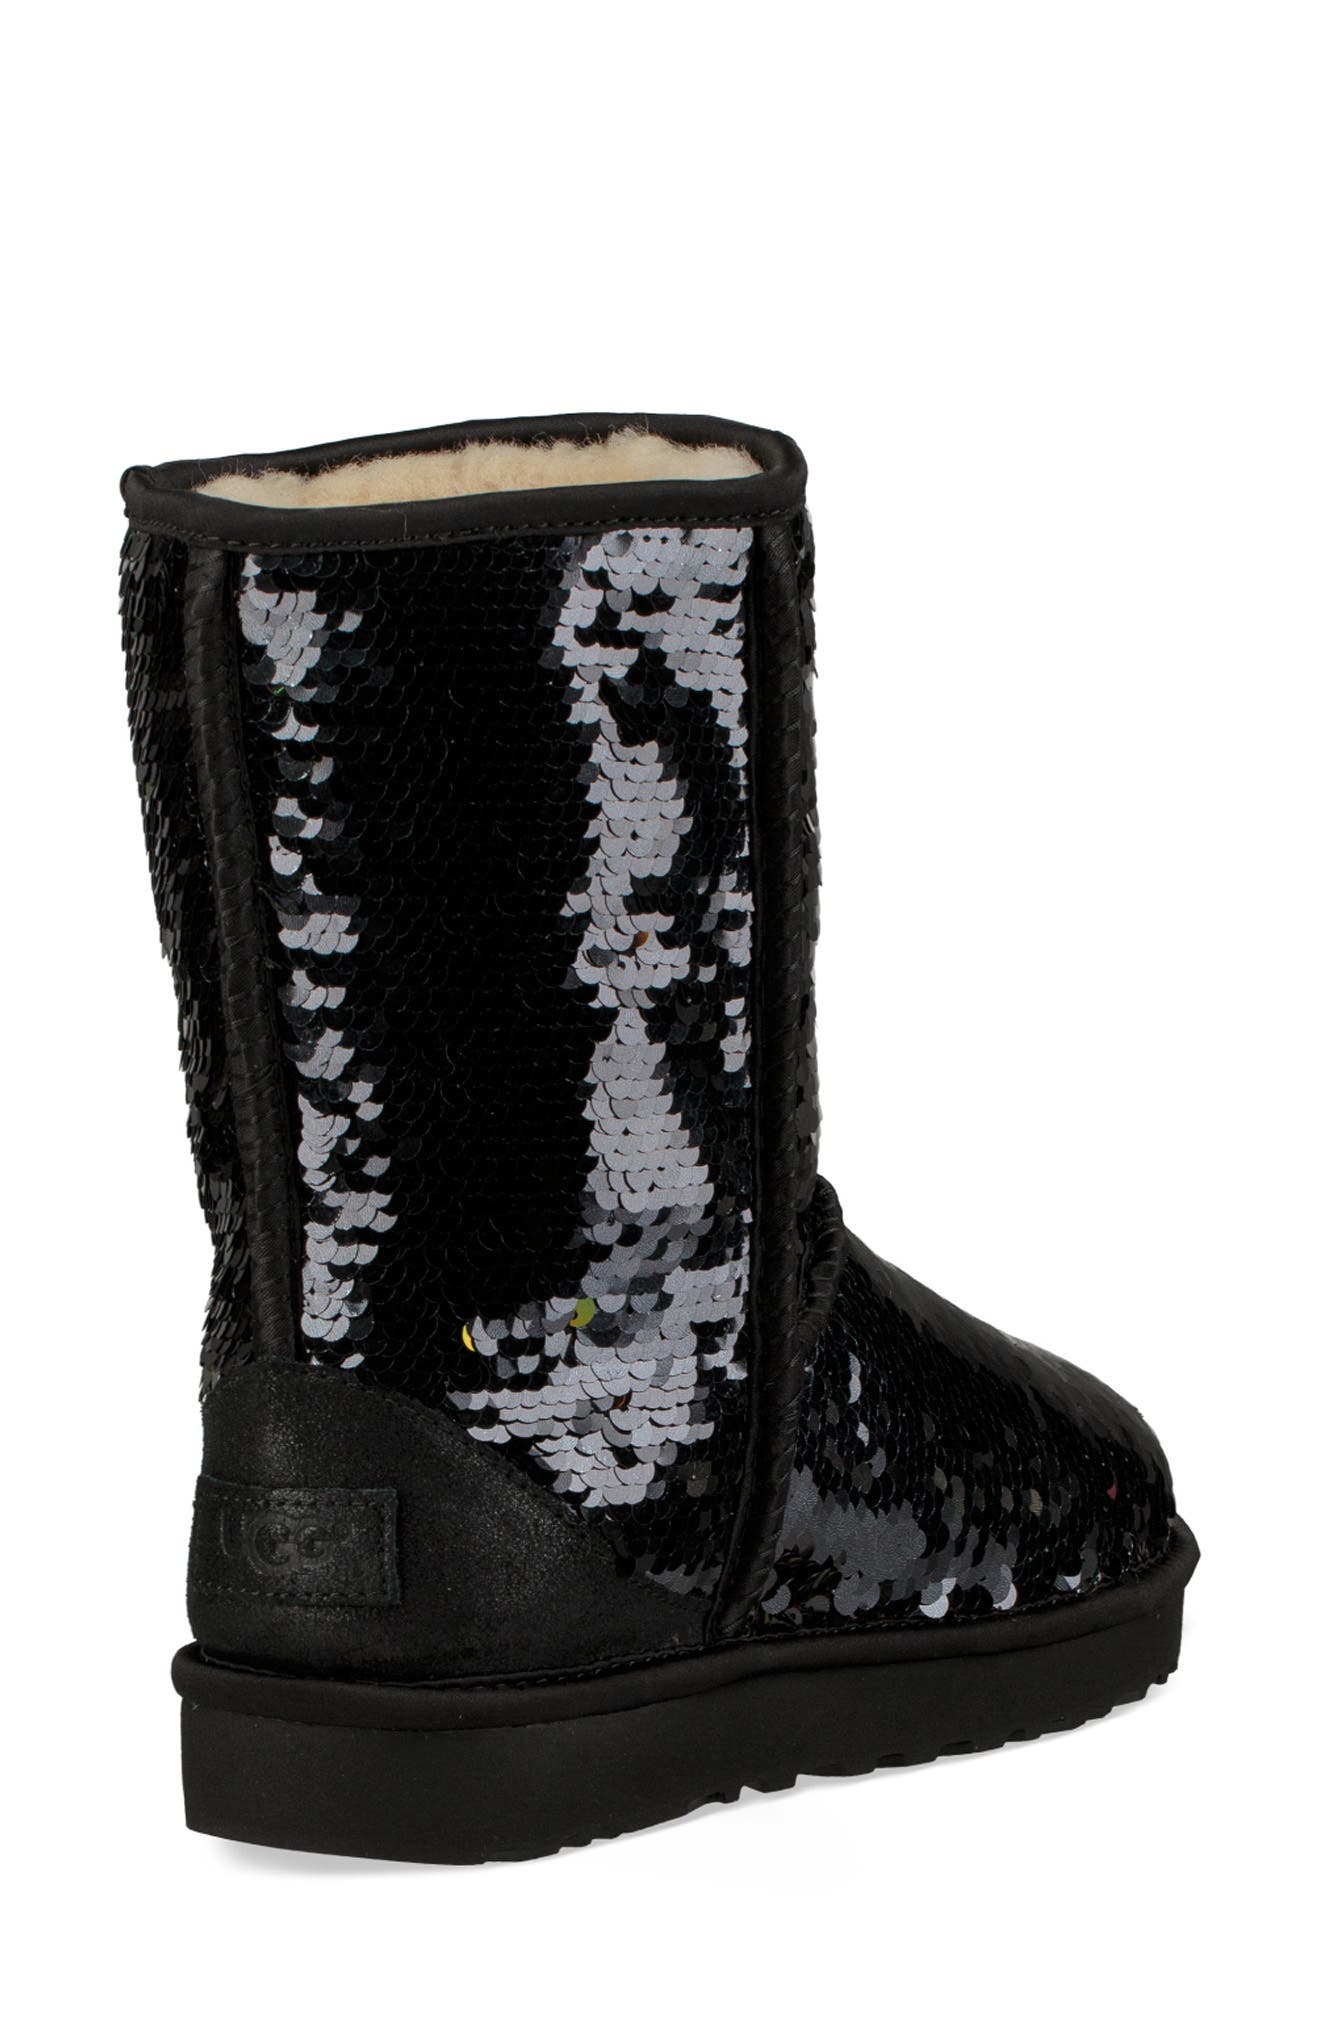 black sequin ugg boots size 9